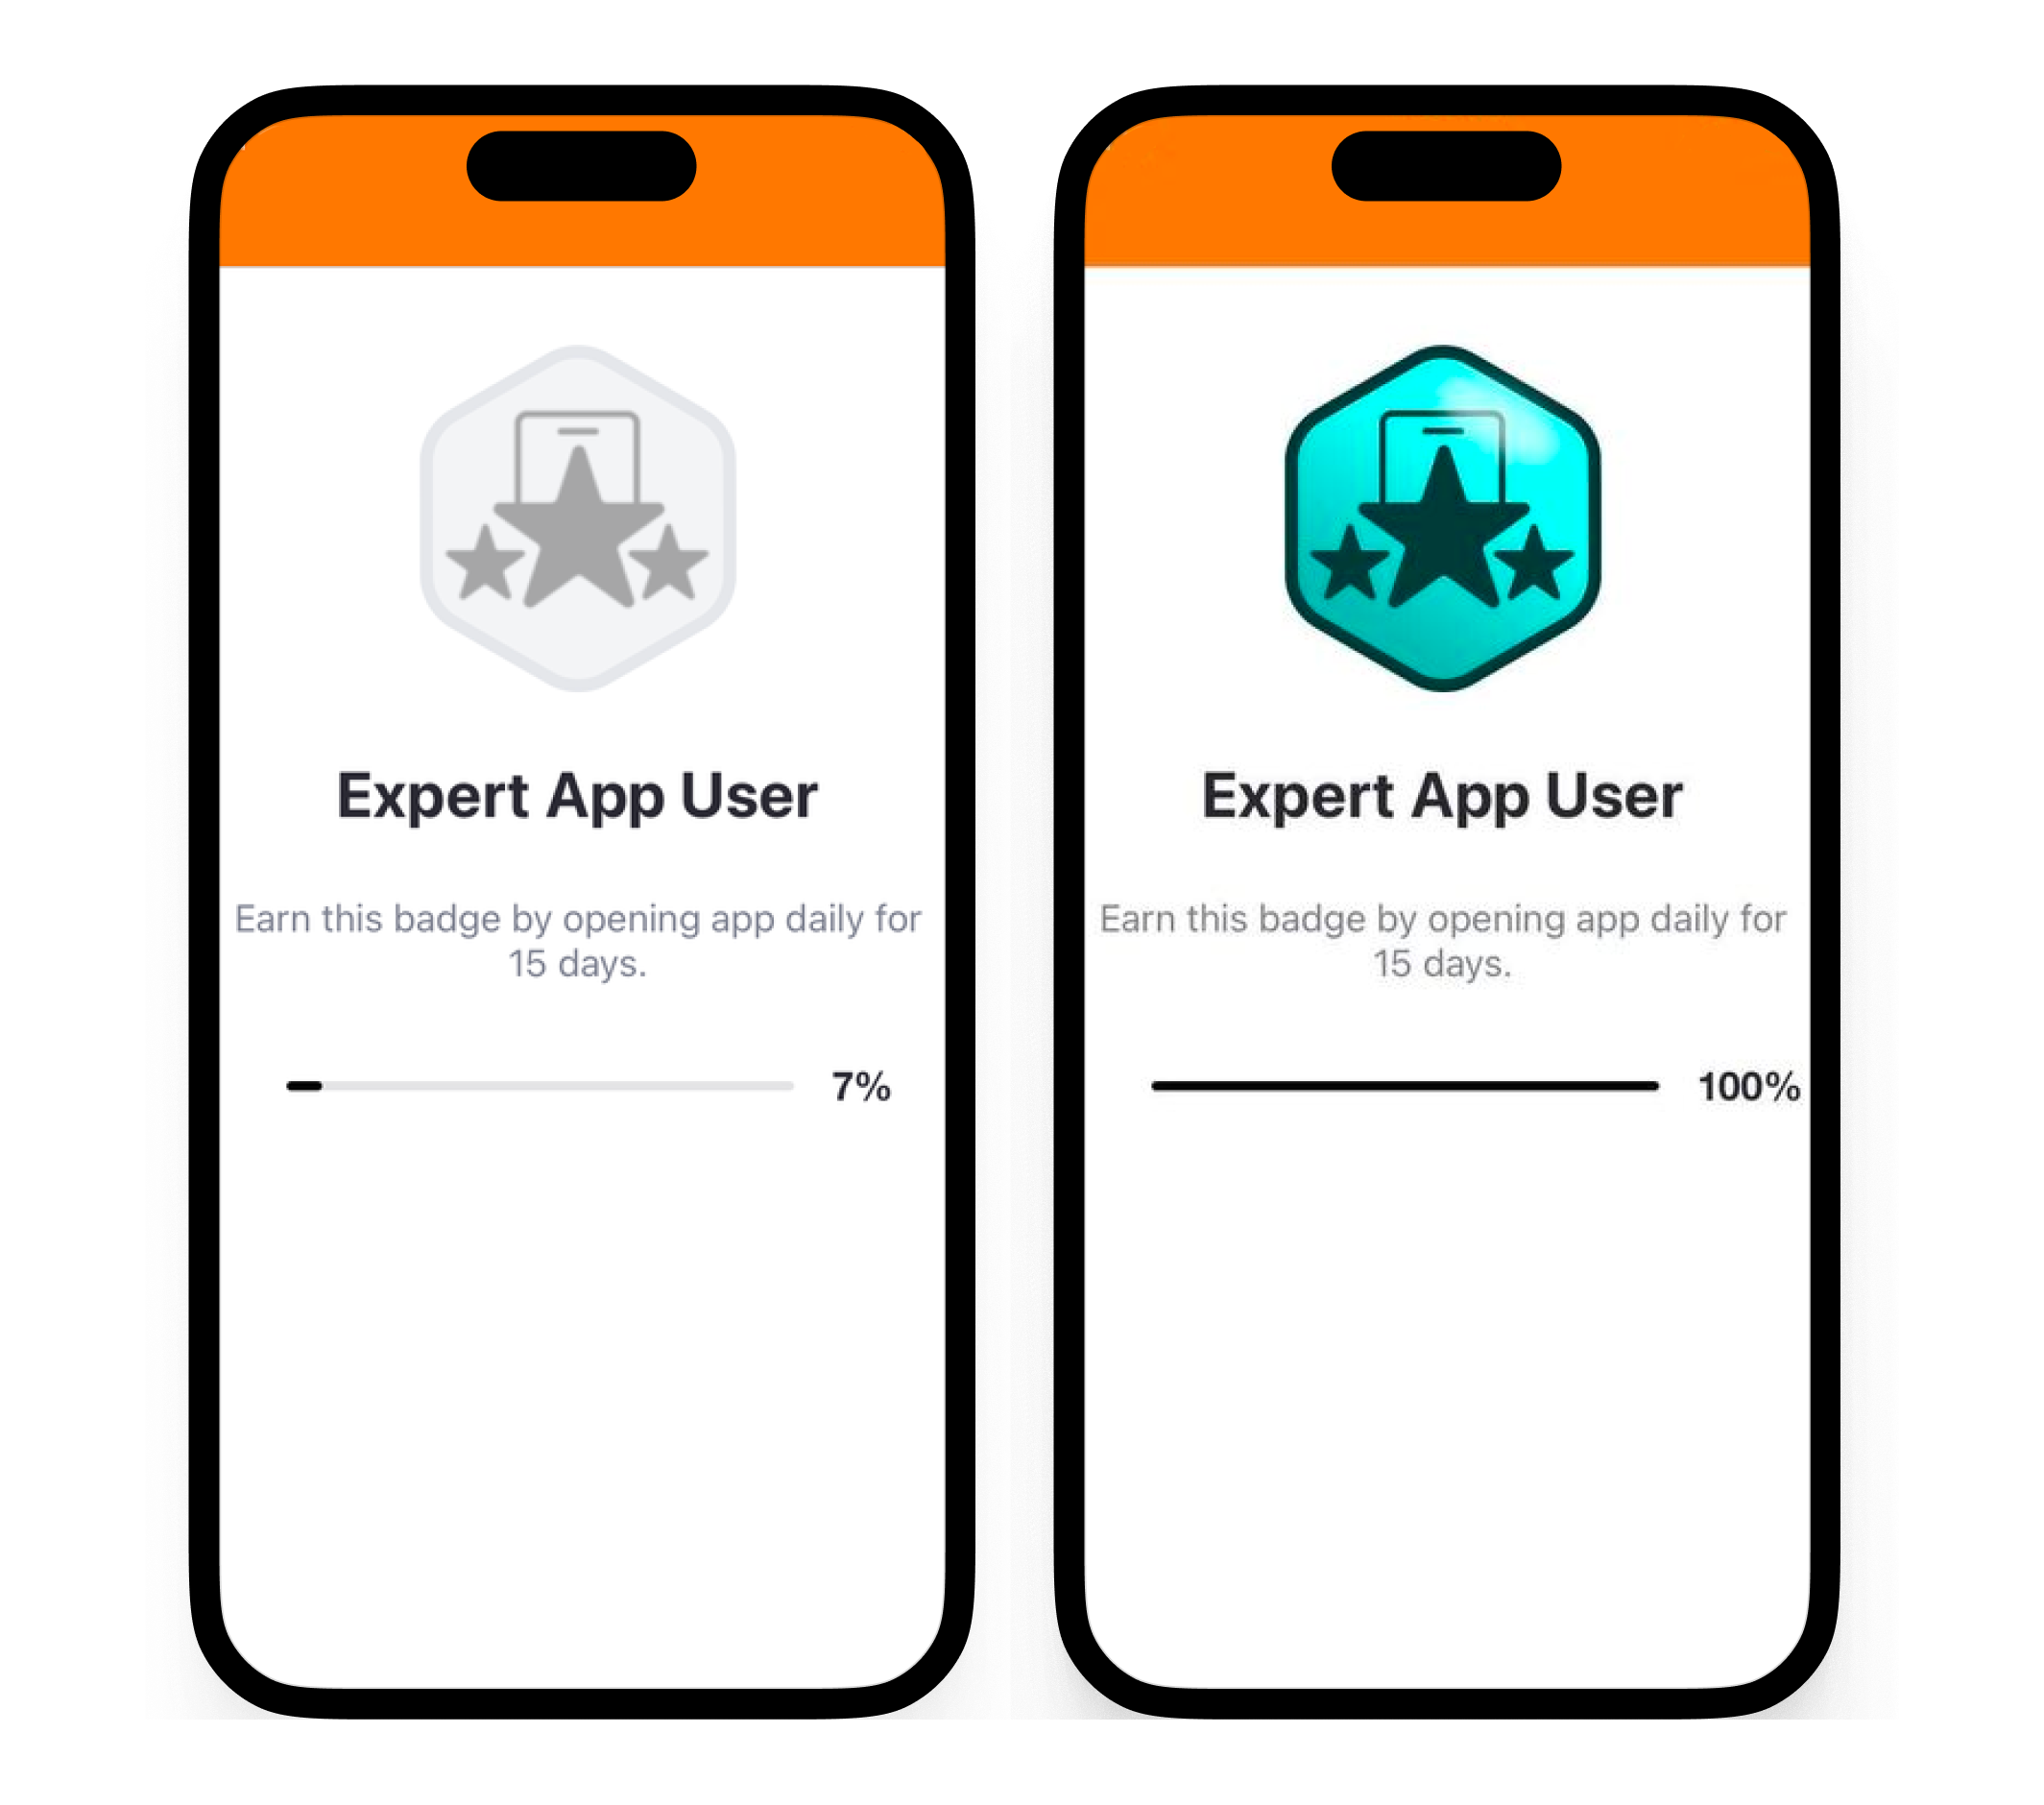 Gamification on iphone showing expert app user badge progress